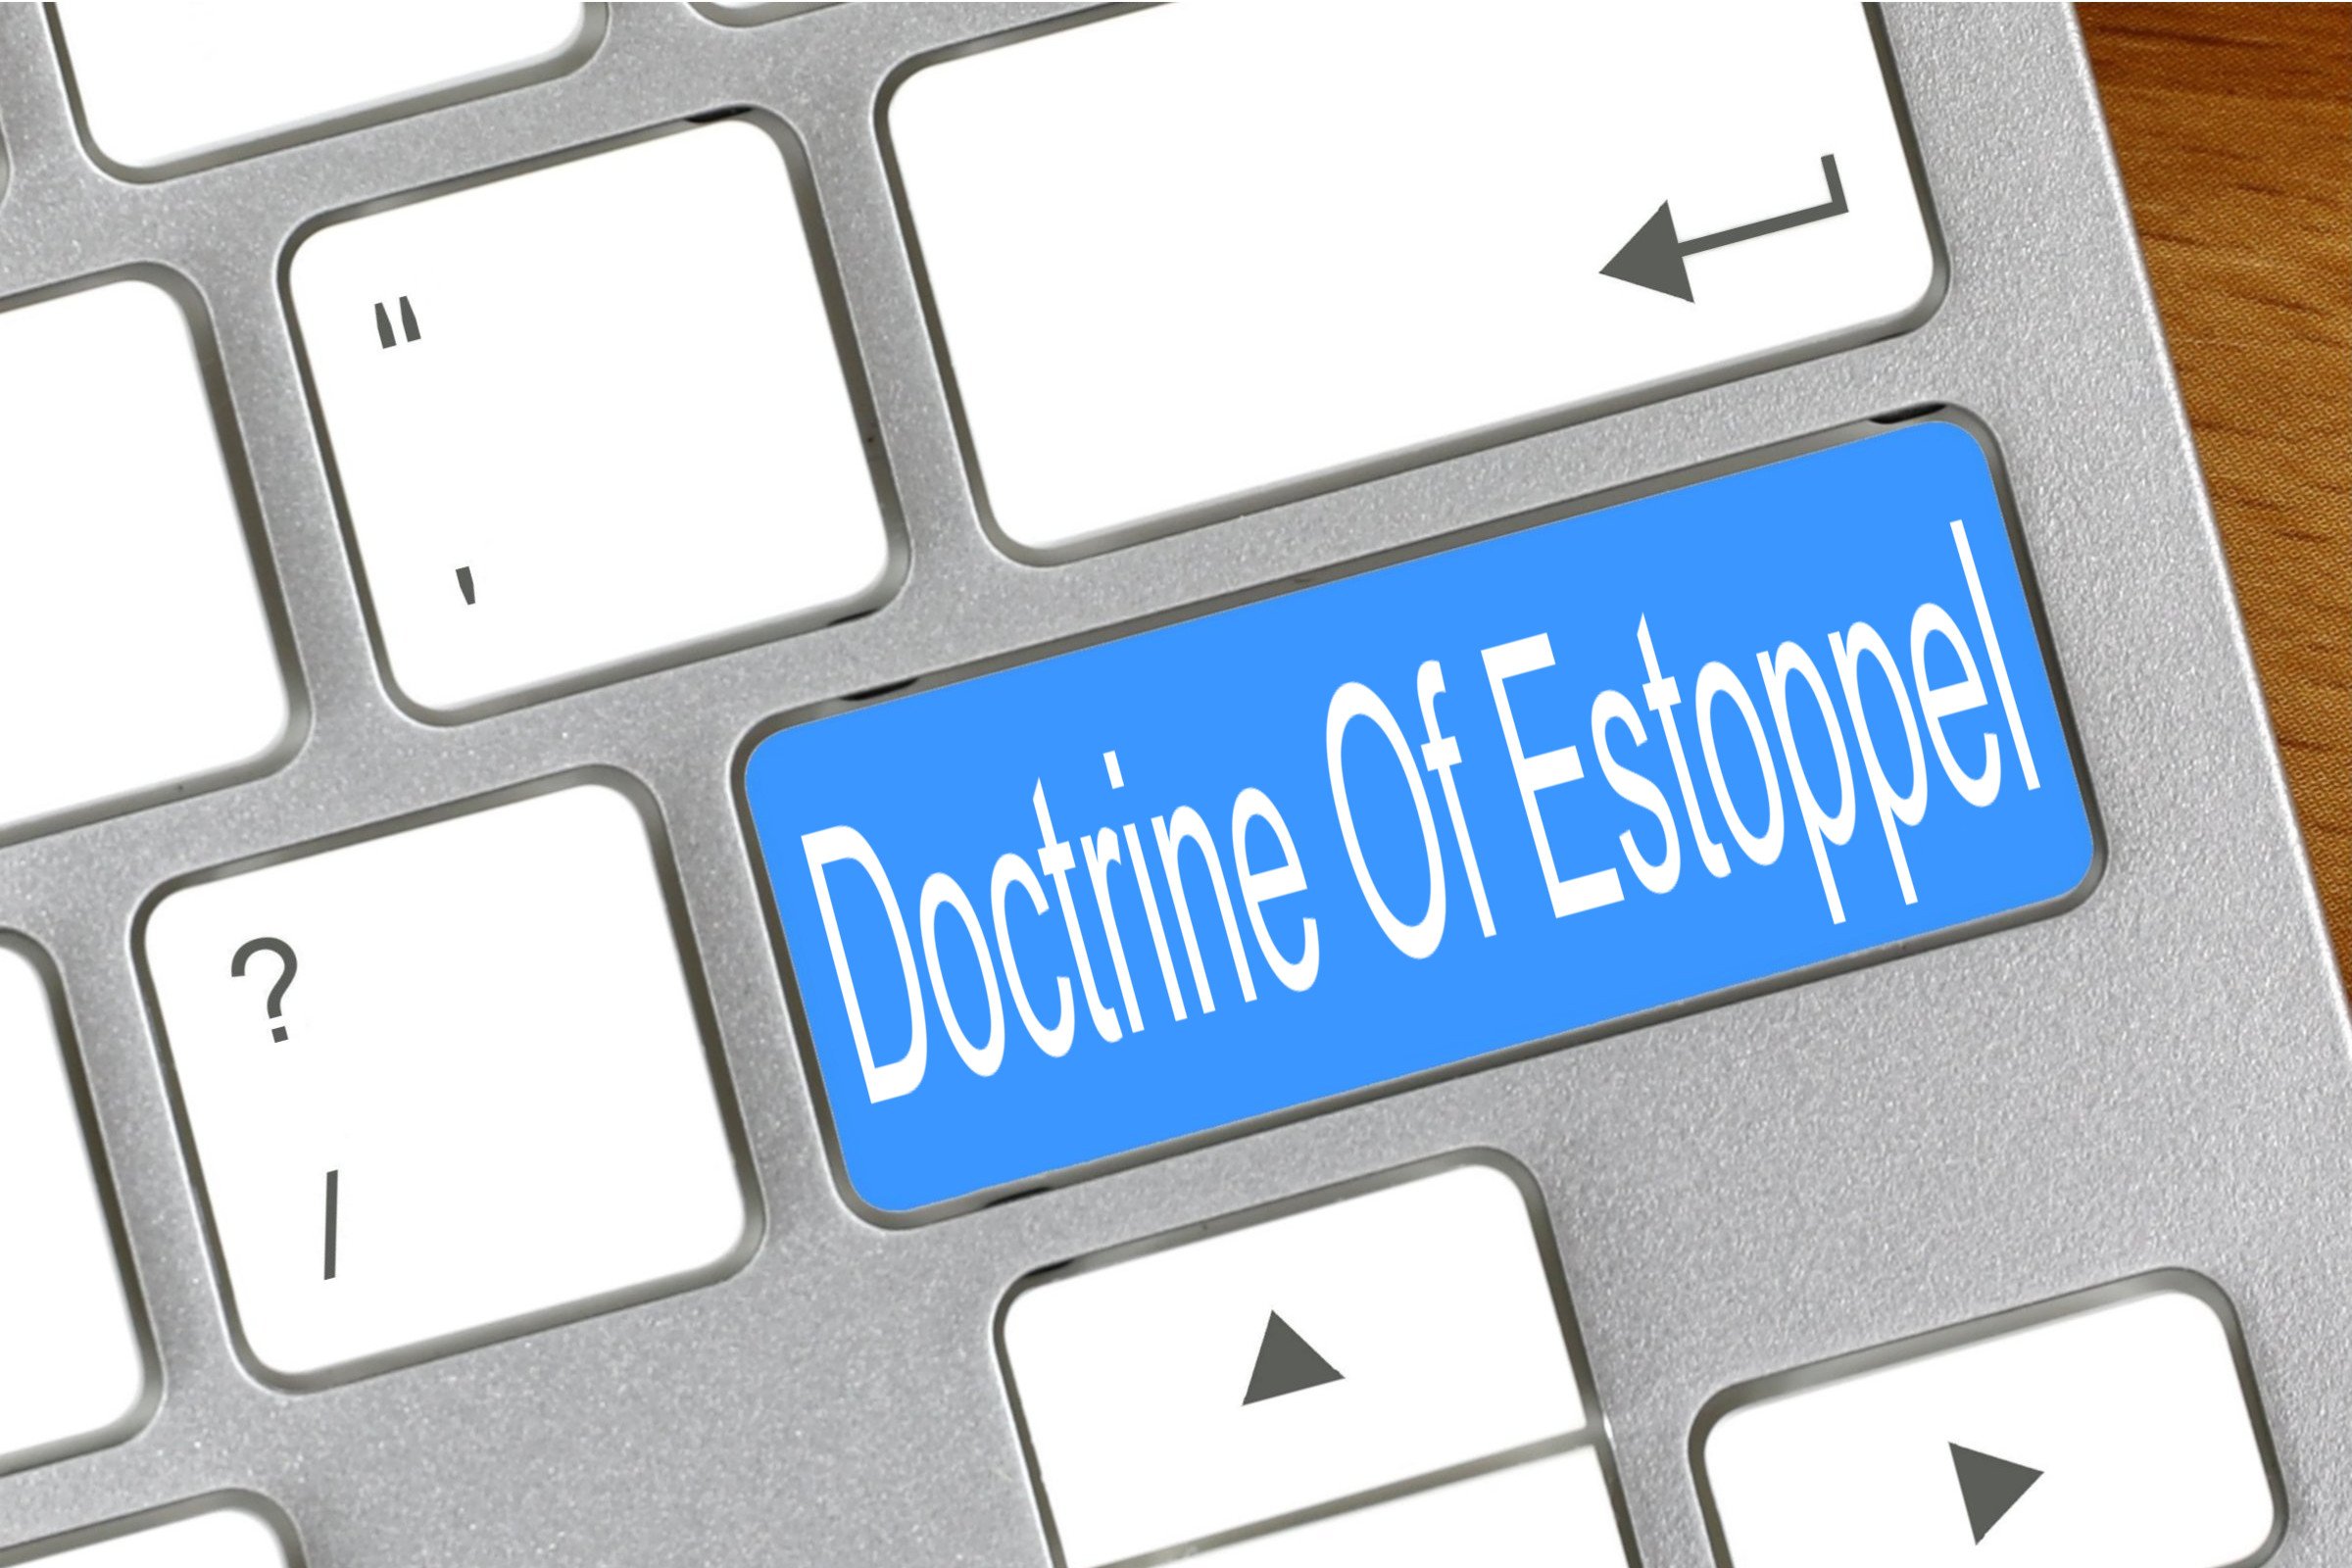 doctrine of estoppel